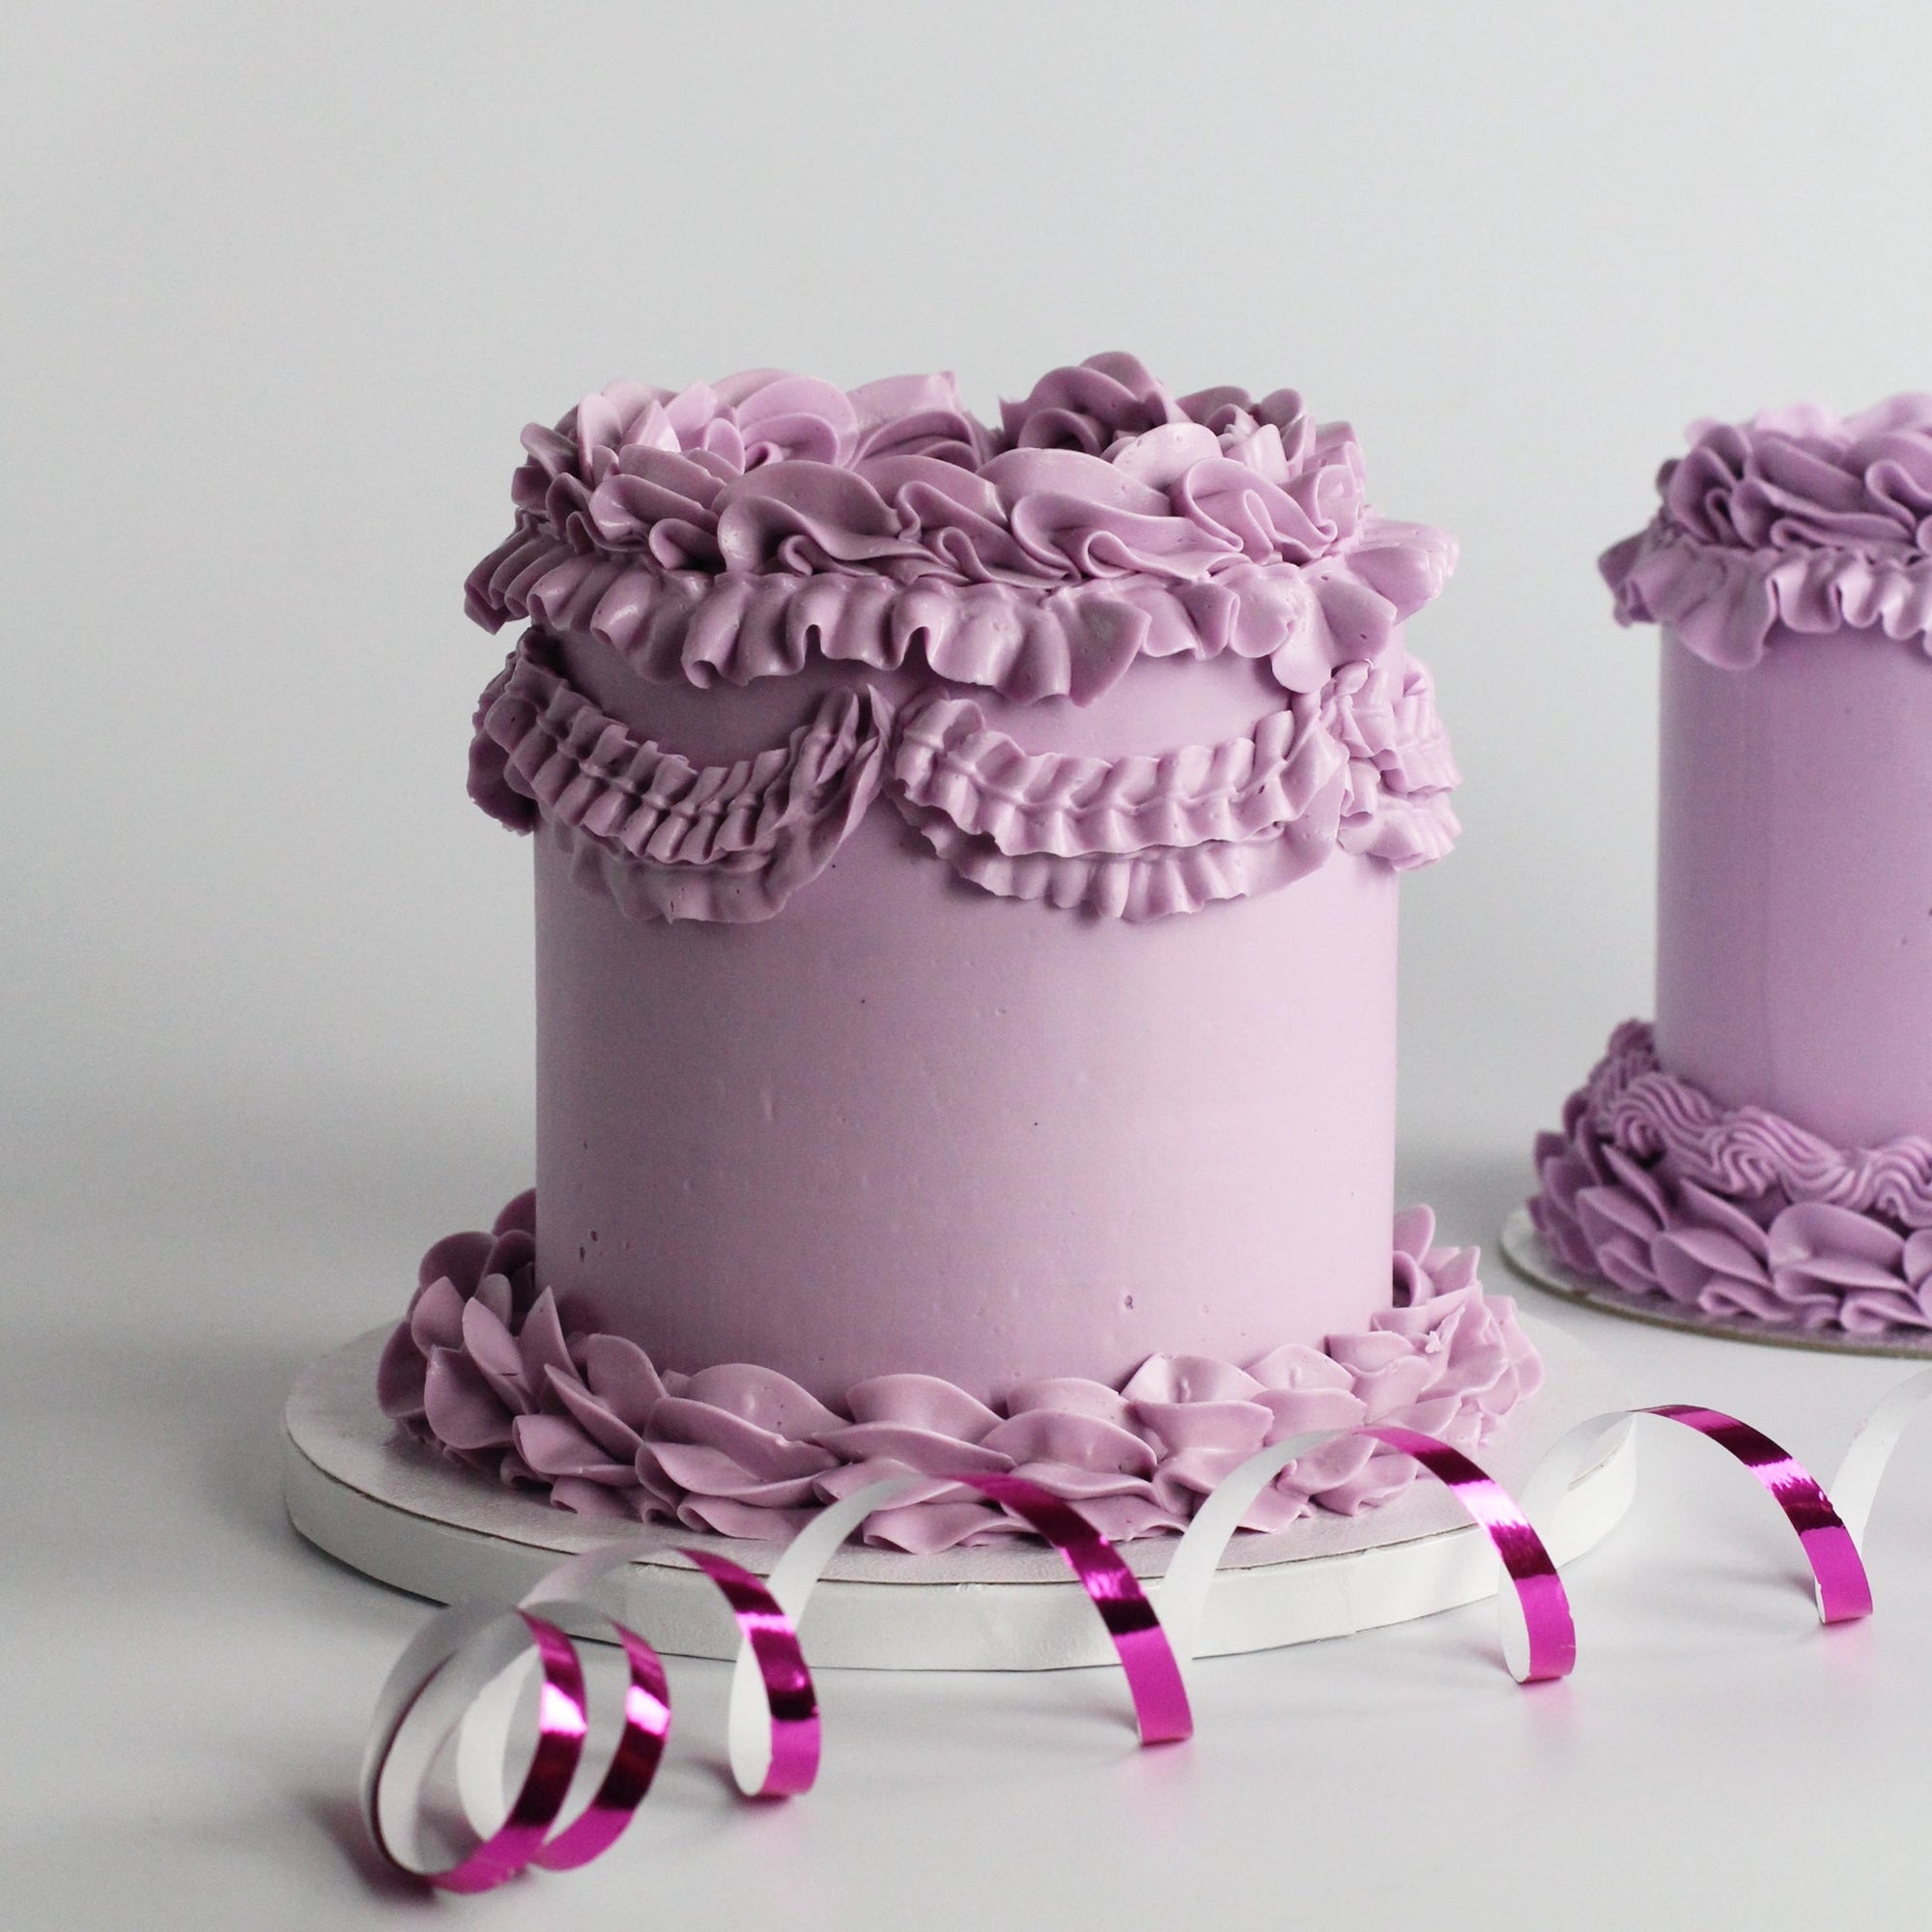 Pink Ruffles, Flowers and Lustre Finish Cake - Amazing Cake Ideas